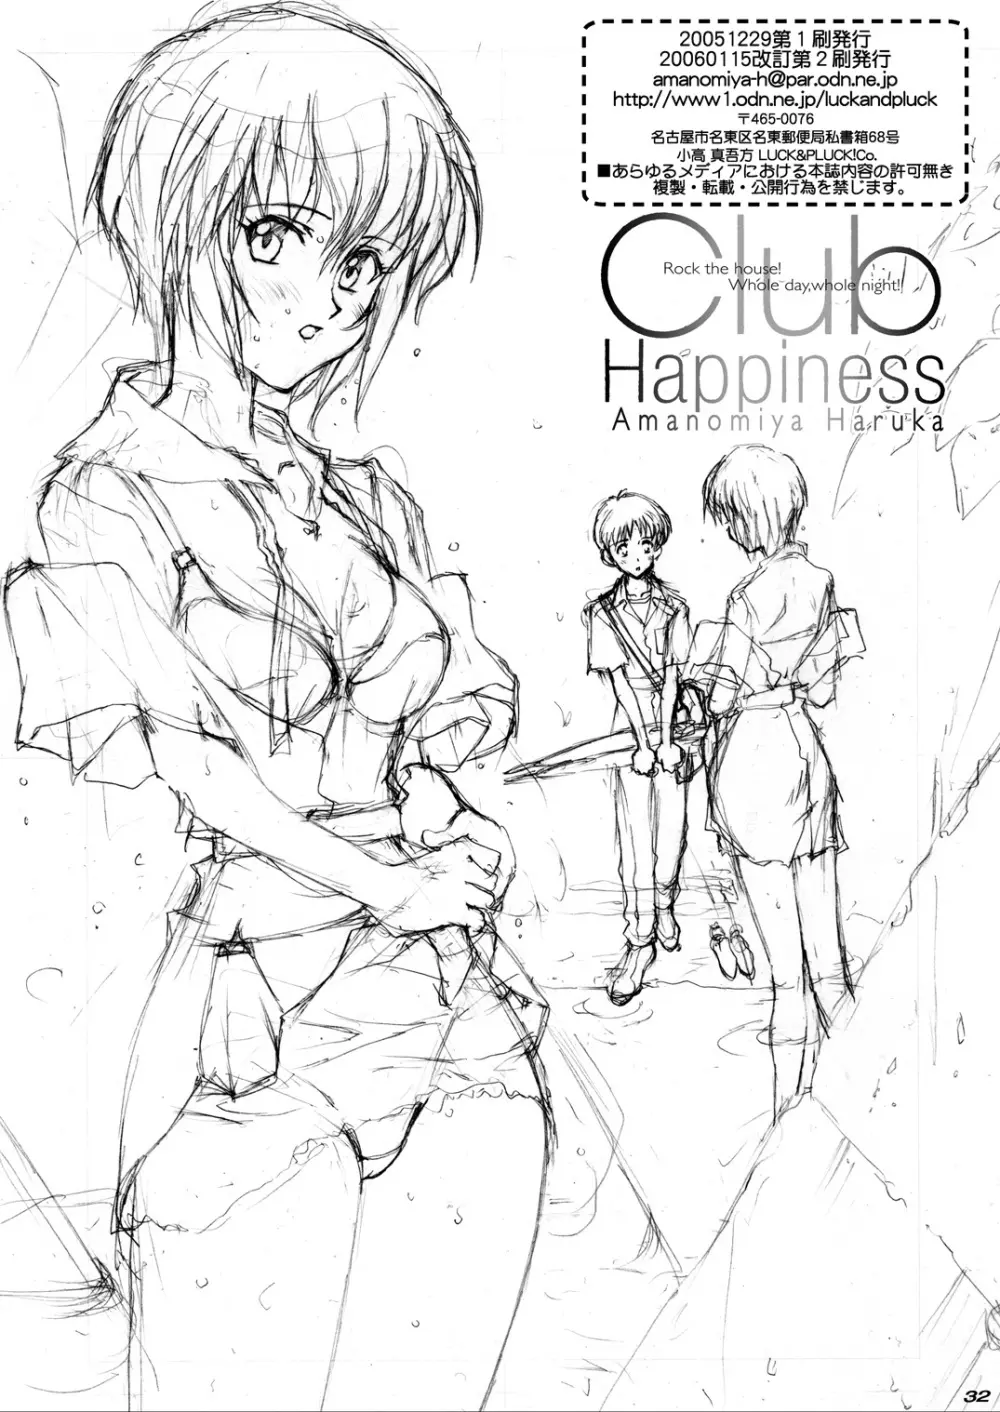 Club Happiness 31ページ